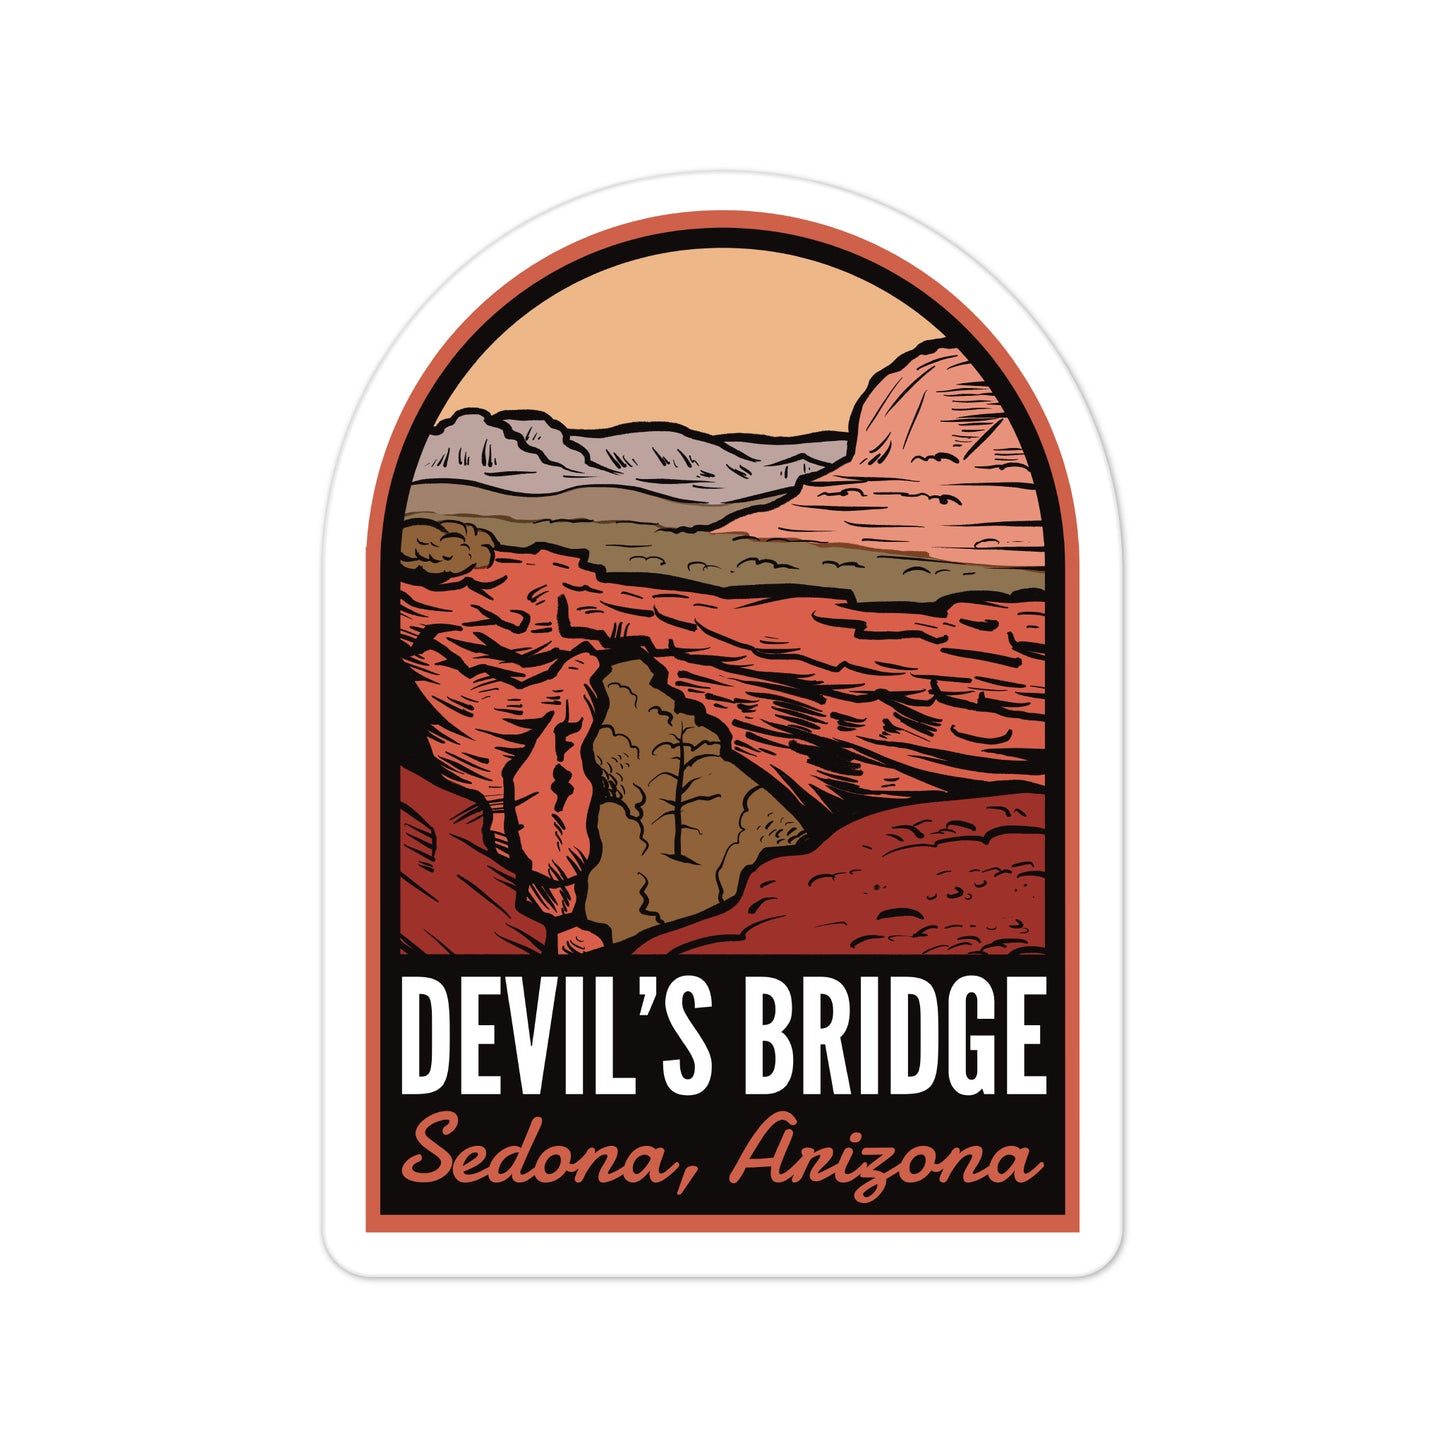 A sticker of Devils Bridge